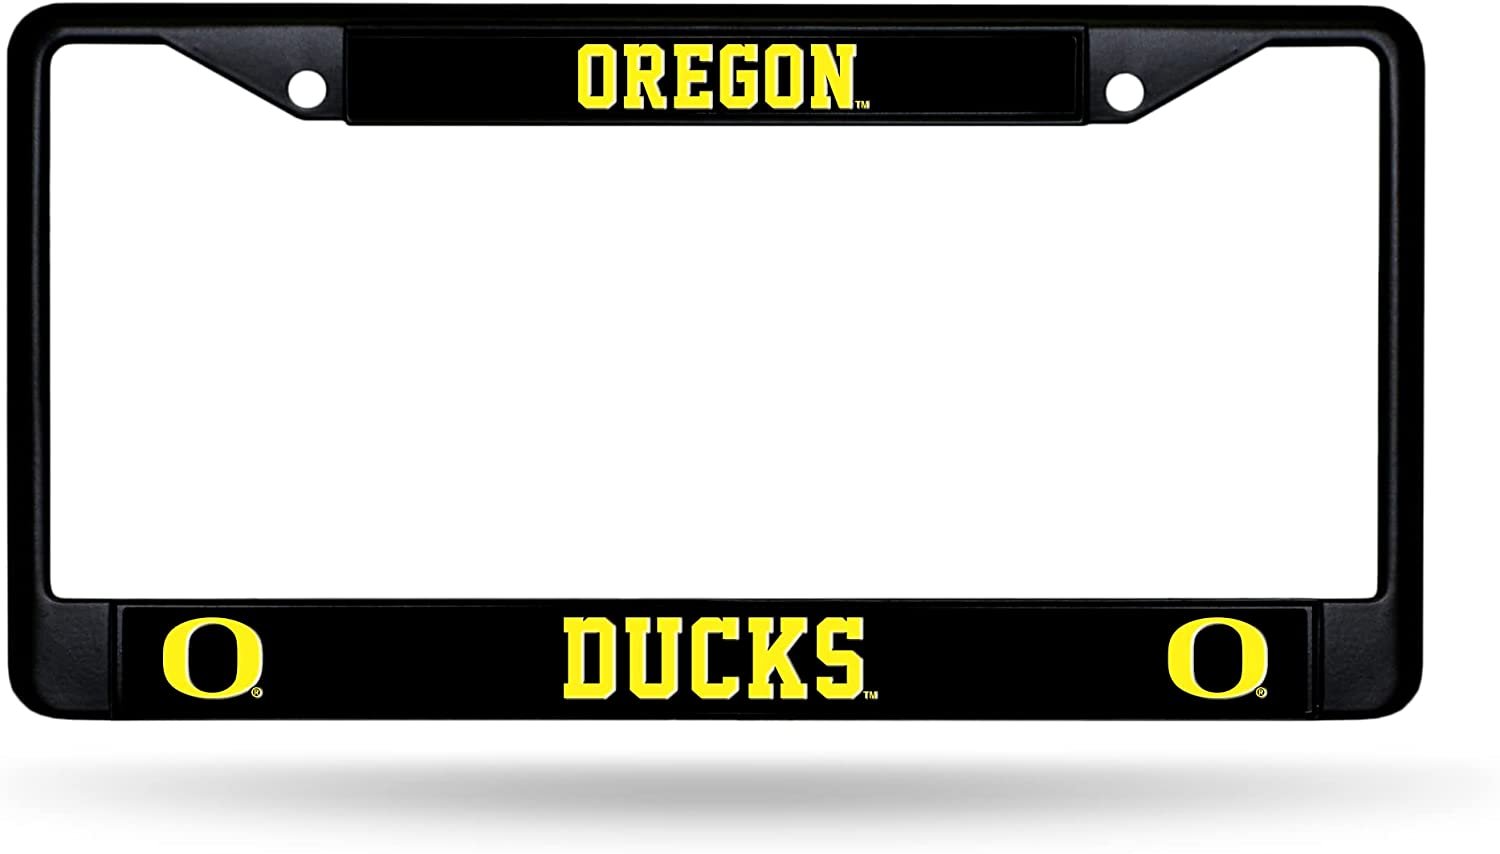 University of Oregon Ducks Black Metal License Plate Frame Chrome Tag Cover 6x12 Inch